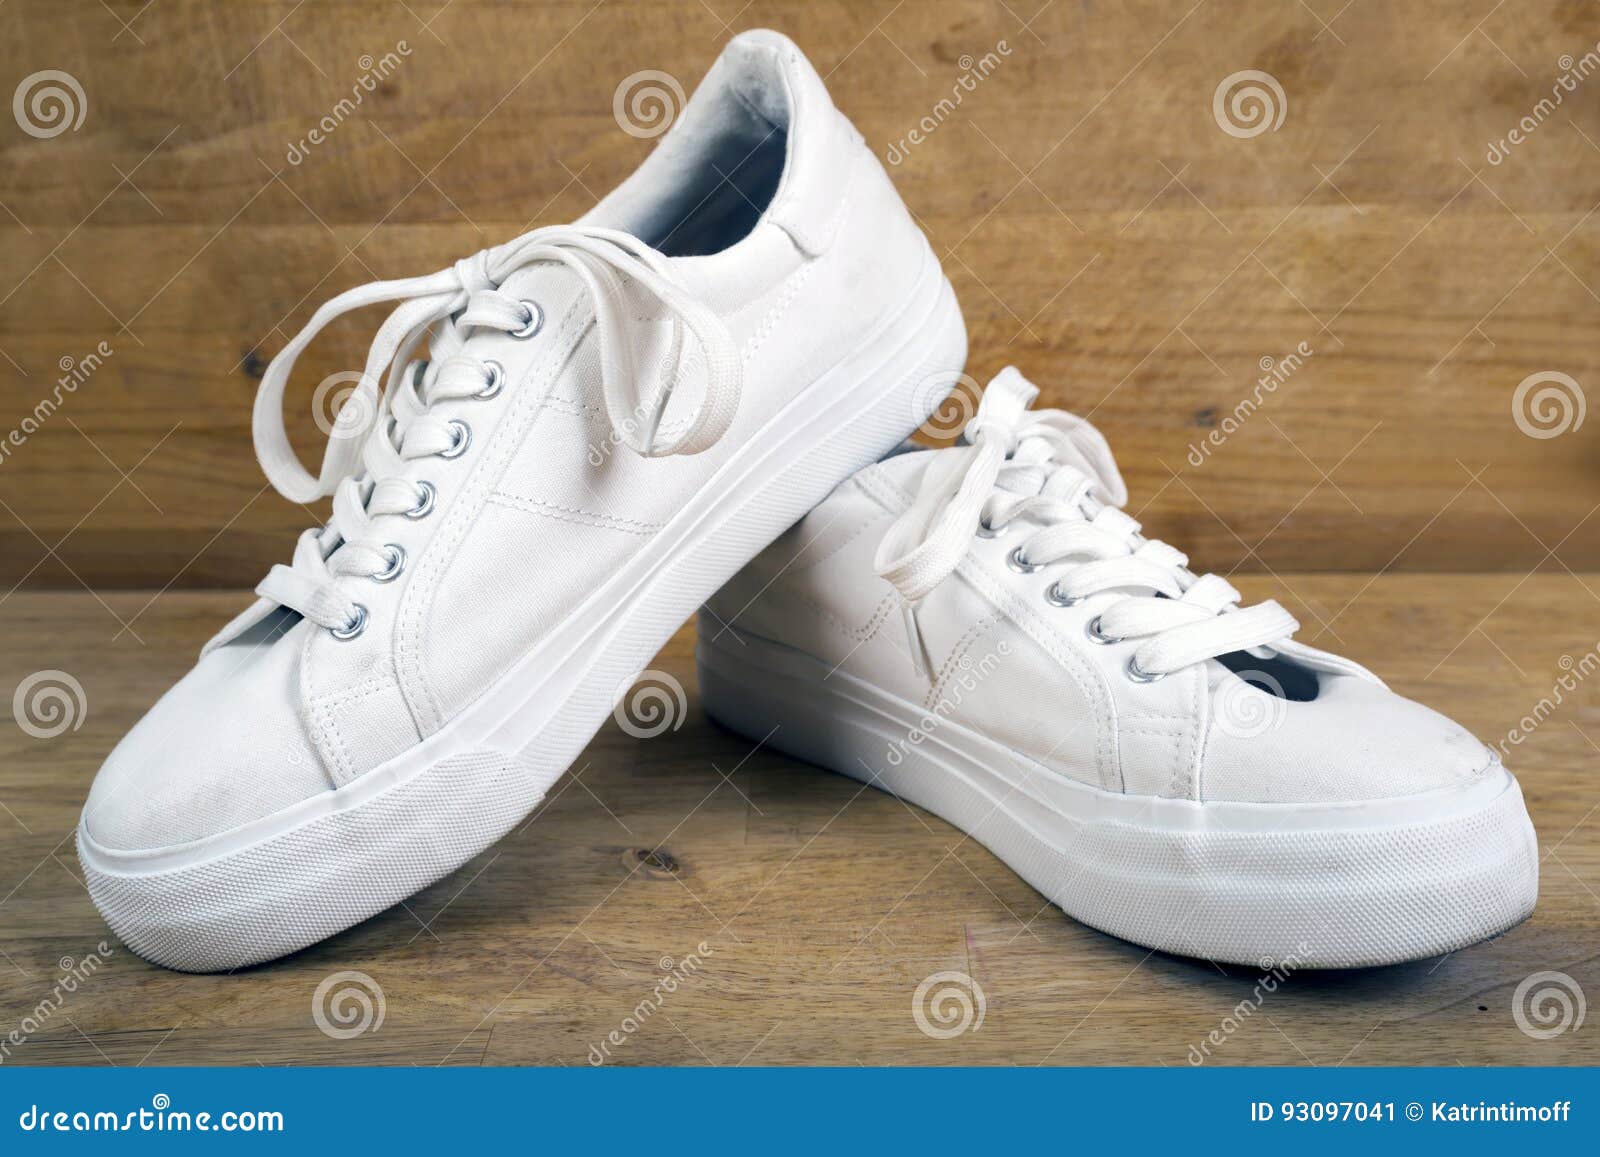 Jordan 1 Bride LV  Trending womens shoes, Swag shoes, Pretty sneakers